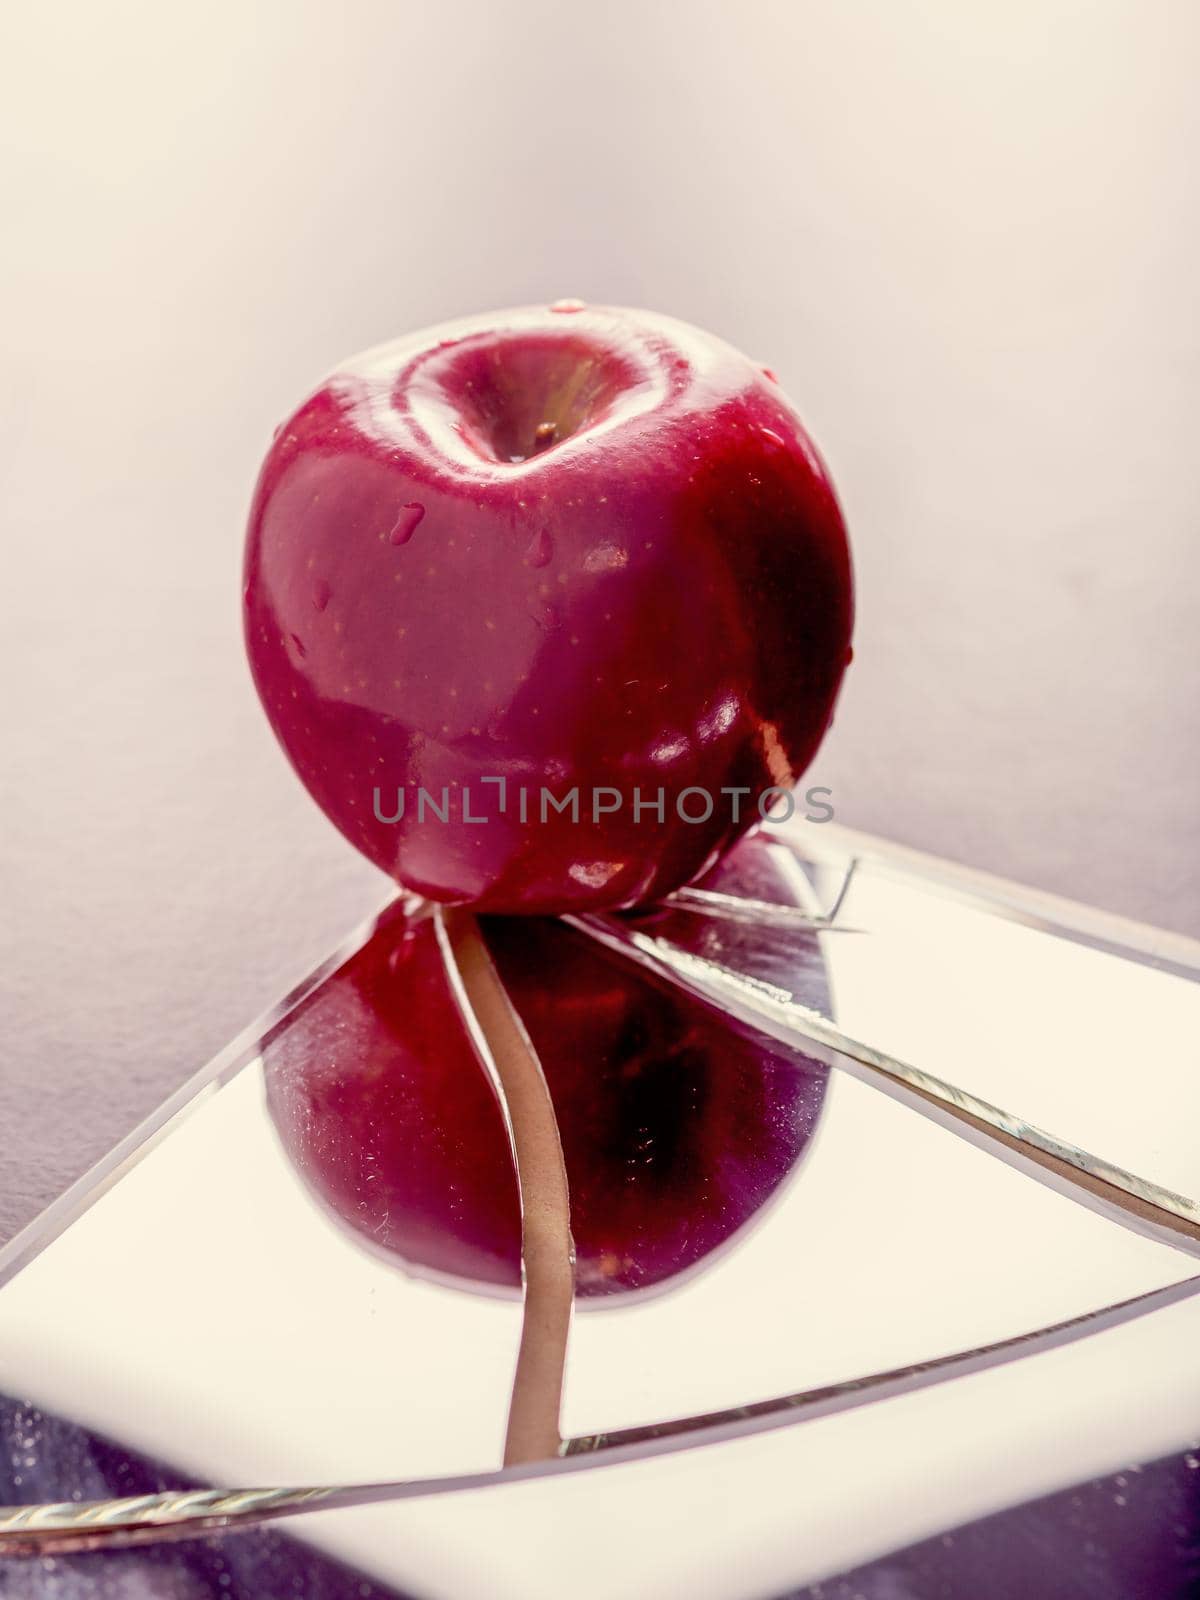 Red apple on cracked broken mirror reflecting